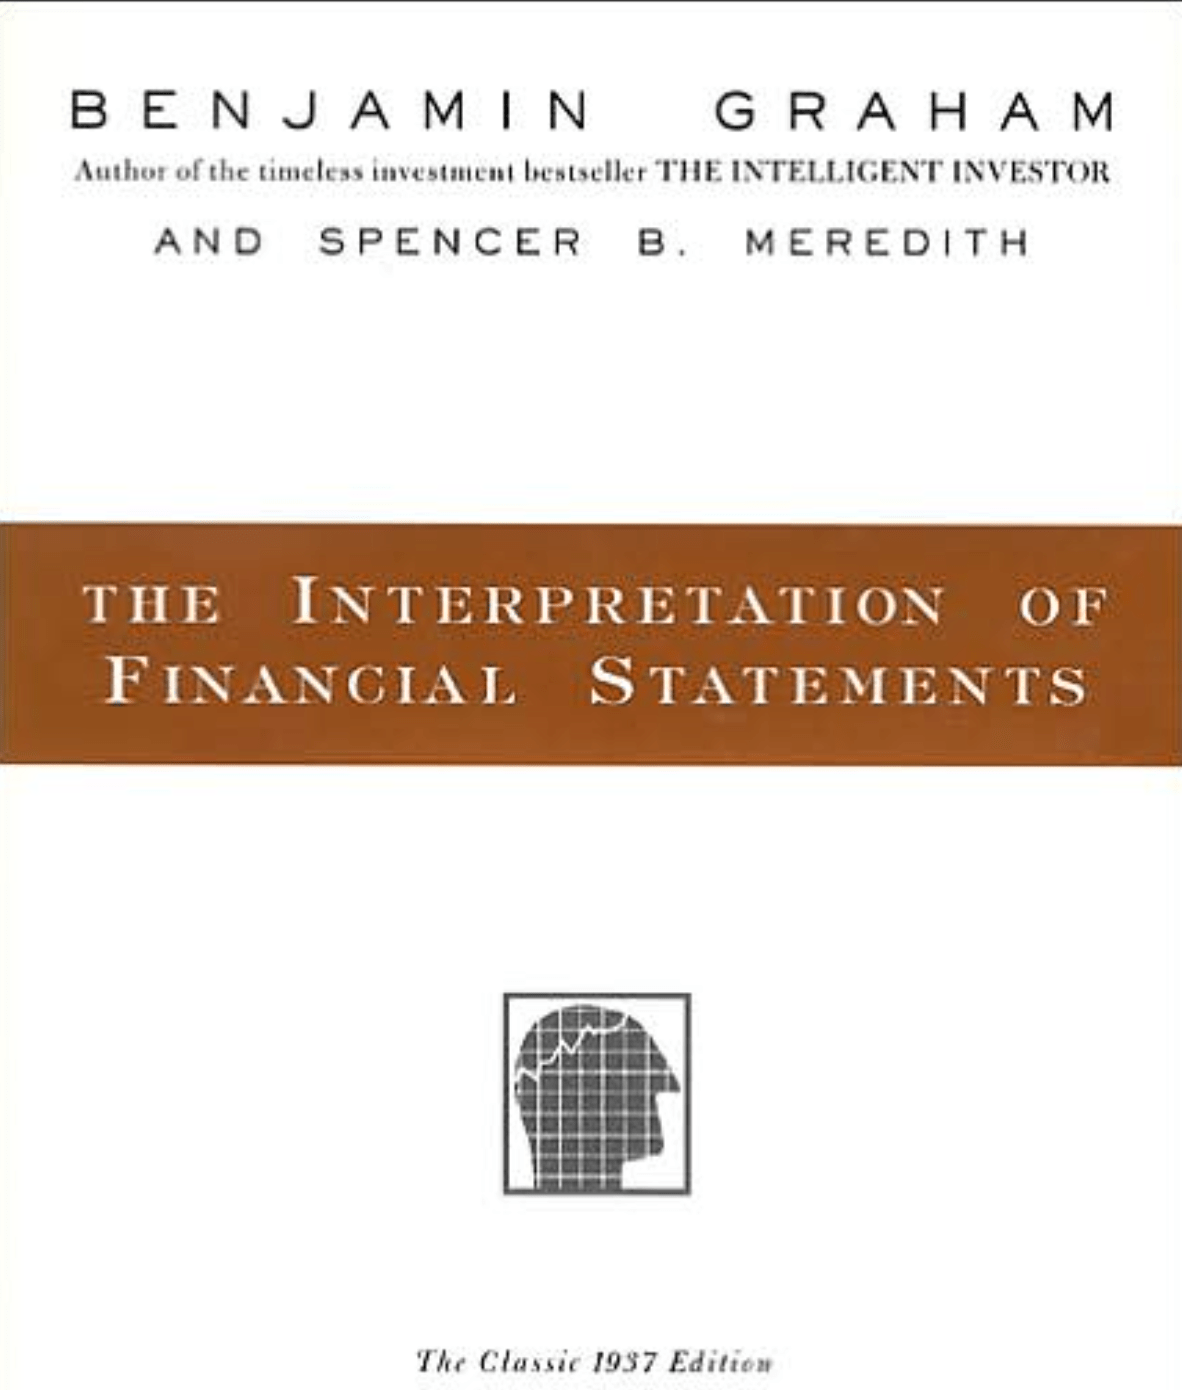 The Interpretation of Financial Statements read online at BusinessBooks.cc